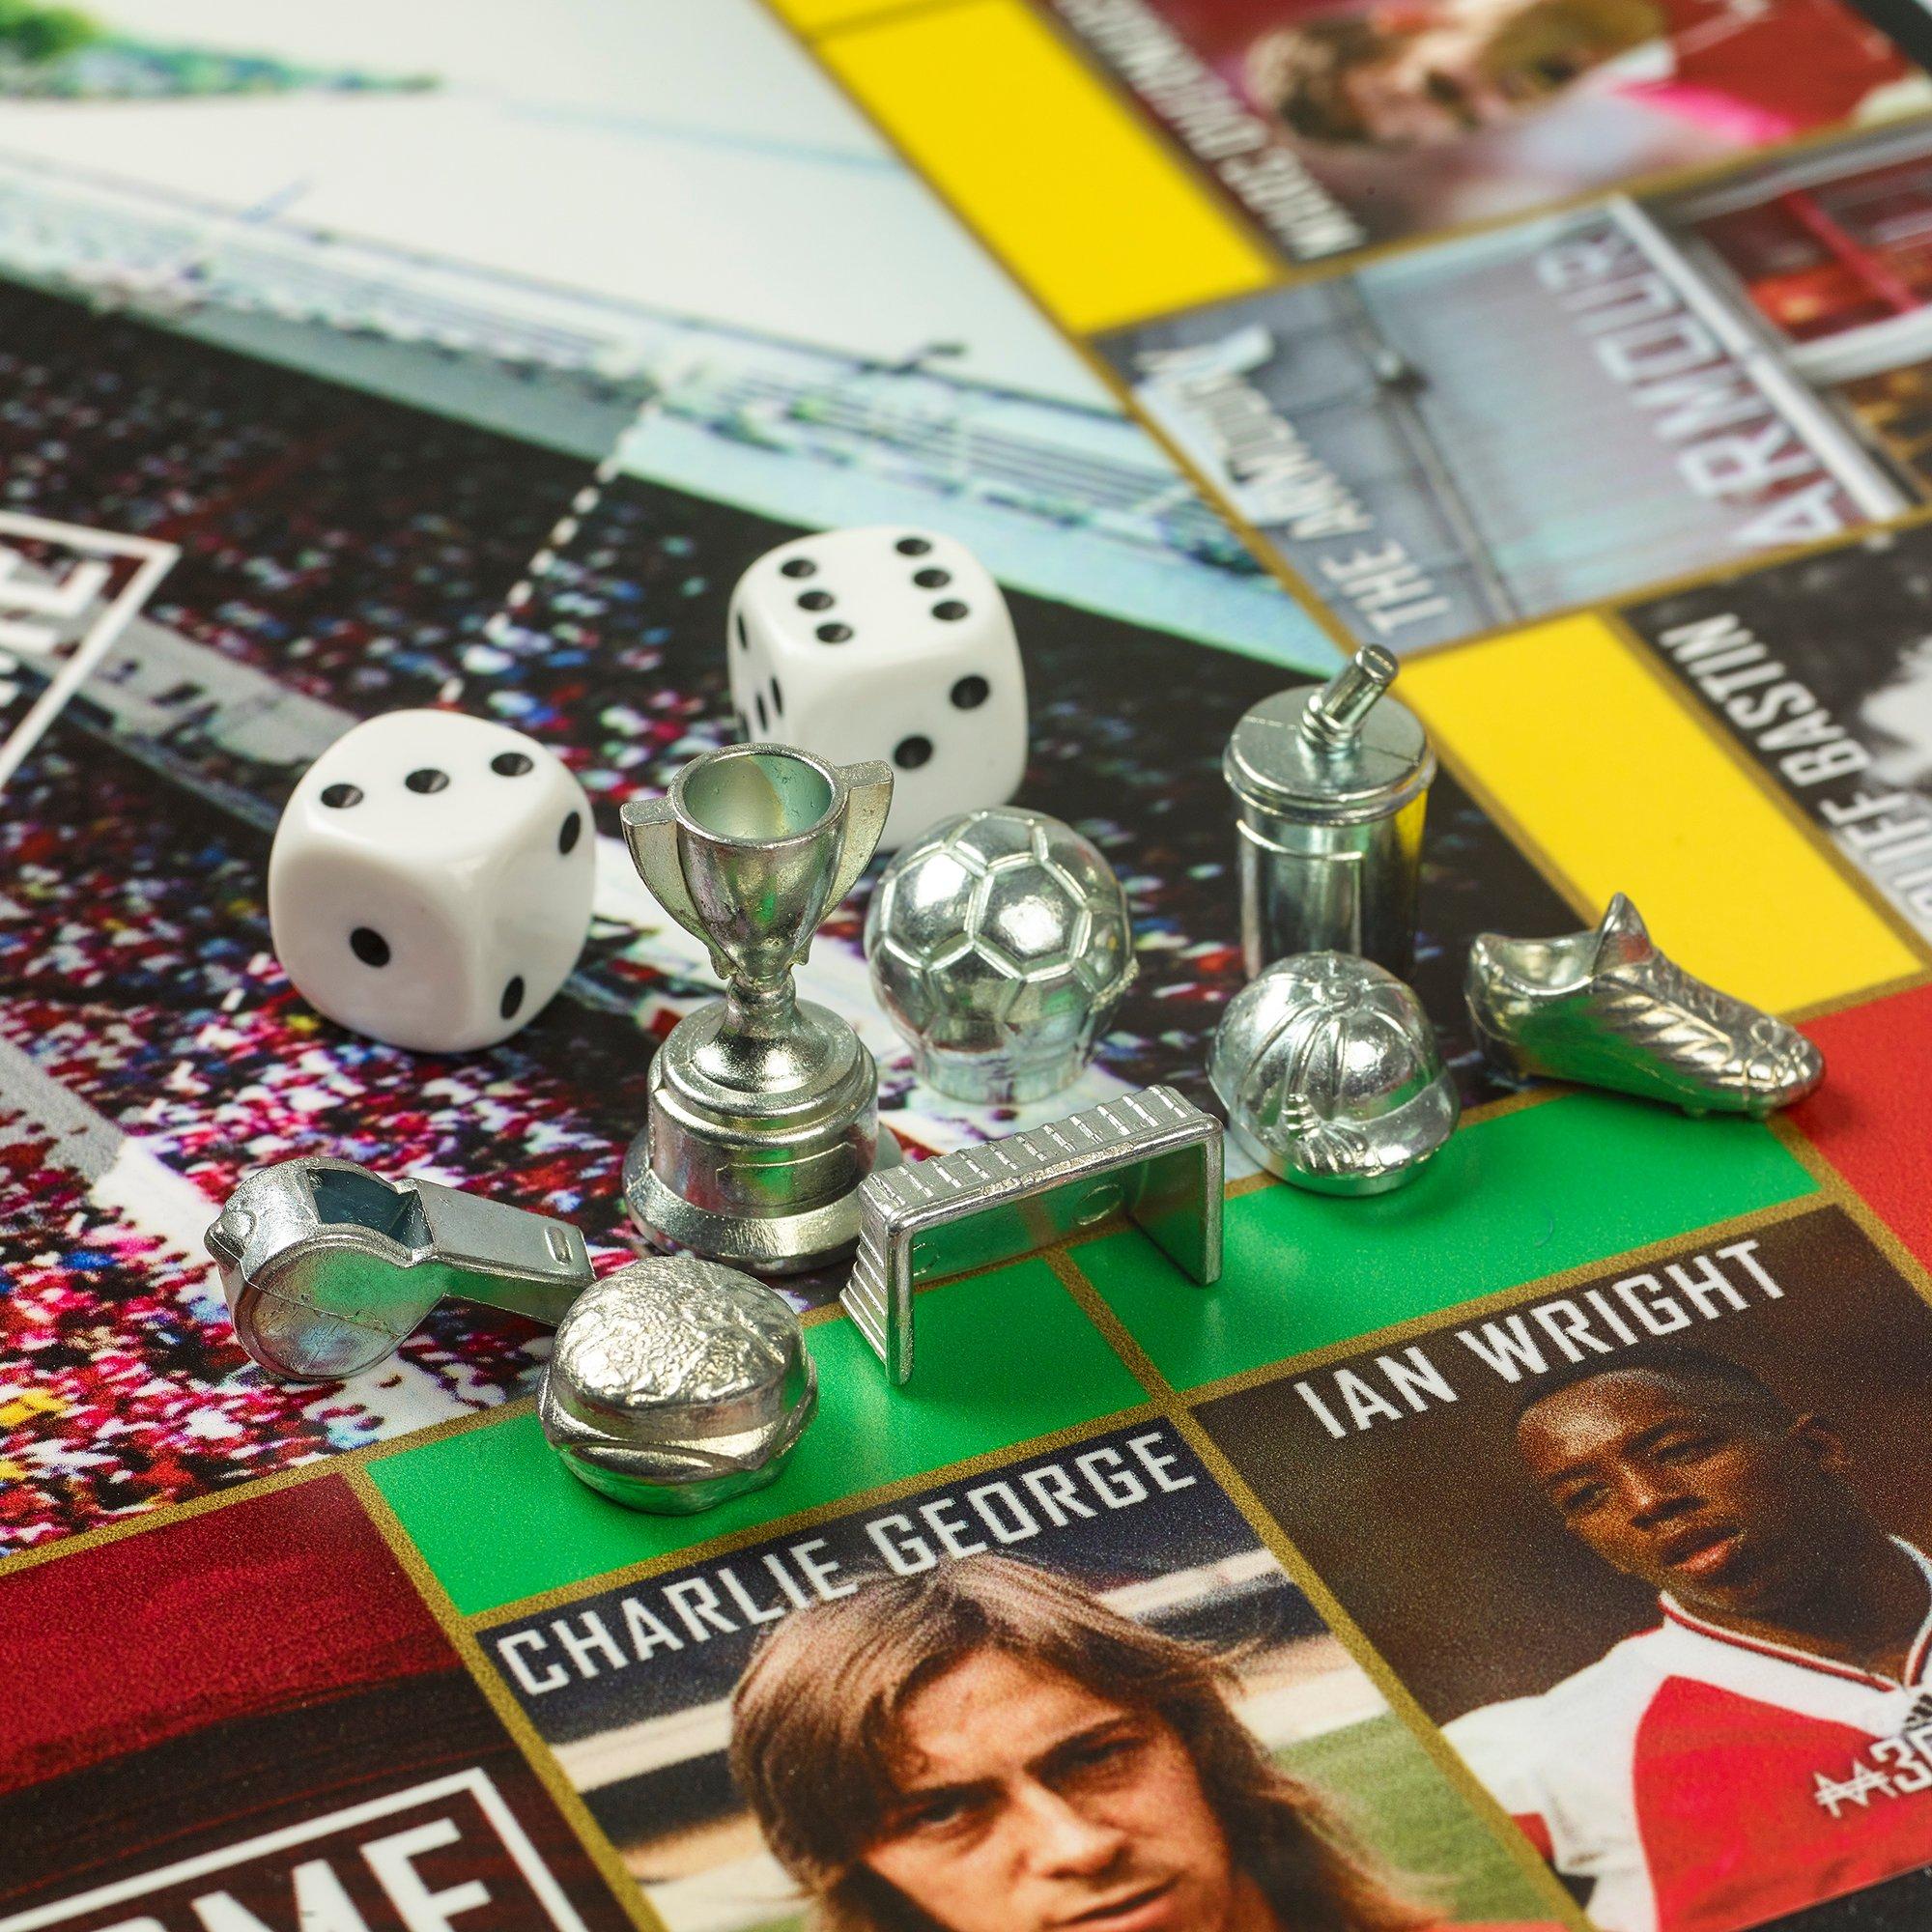 Monopoly Arsenal FC Board Game